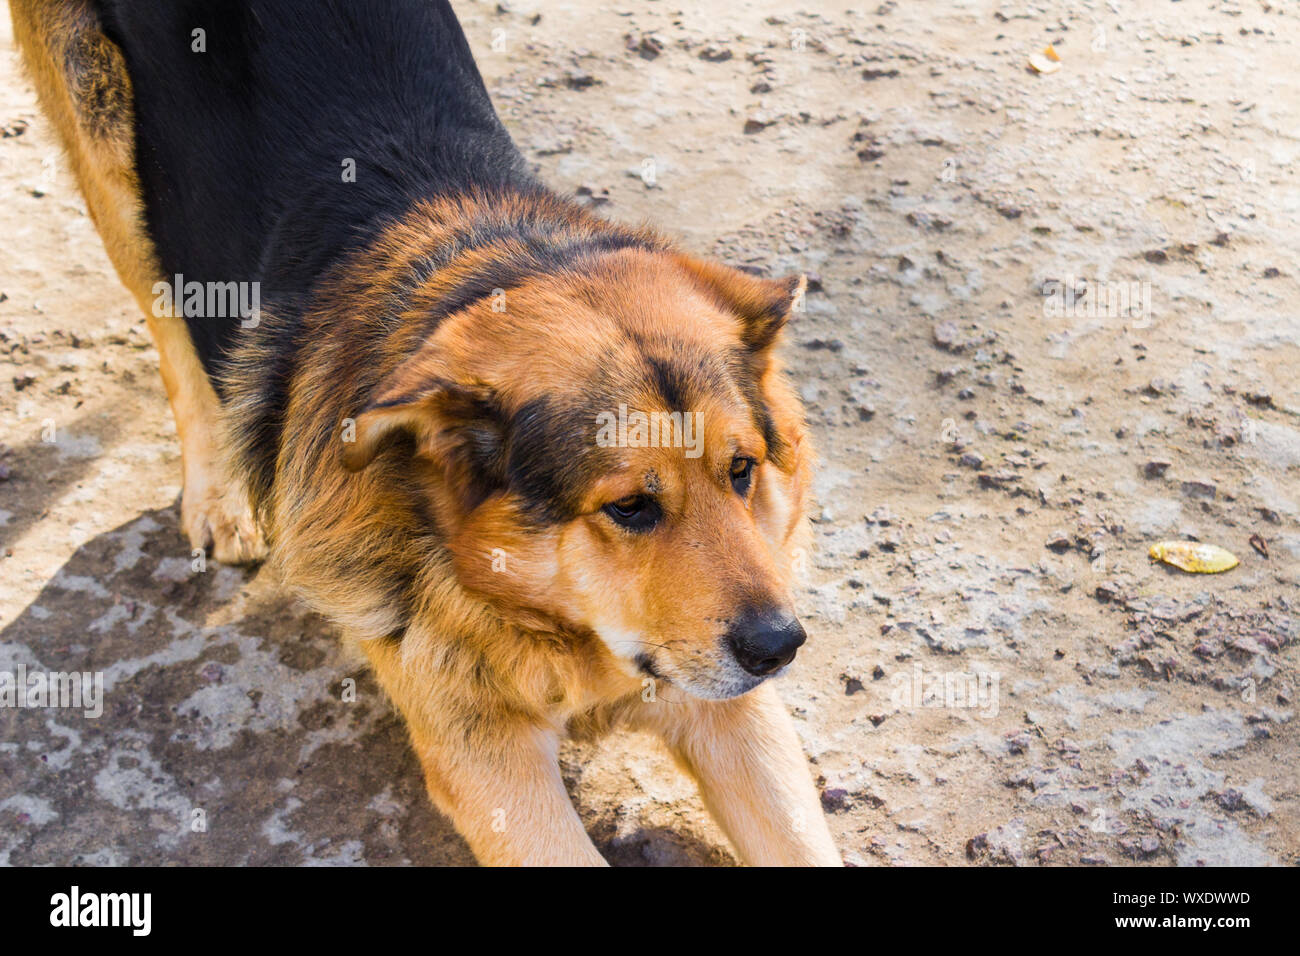 Dog close-up on the ground Stock Photo